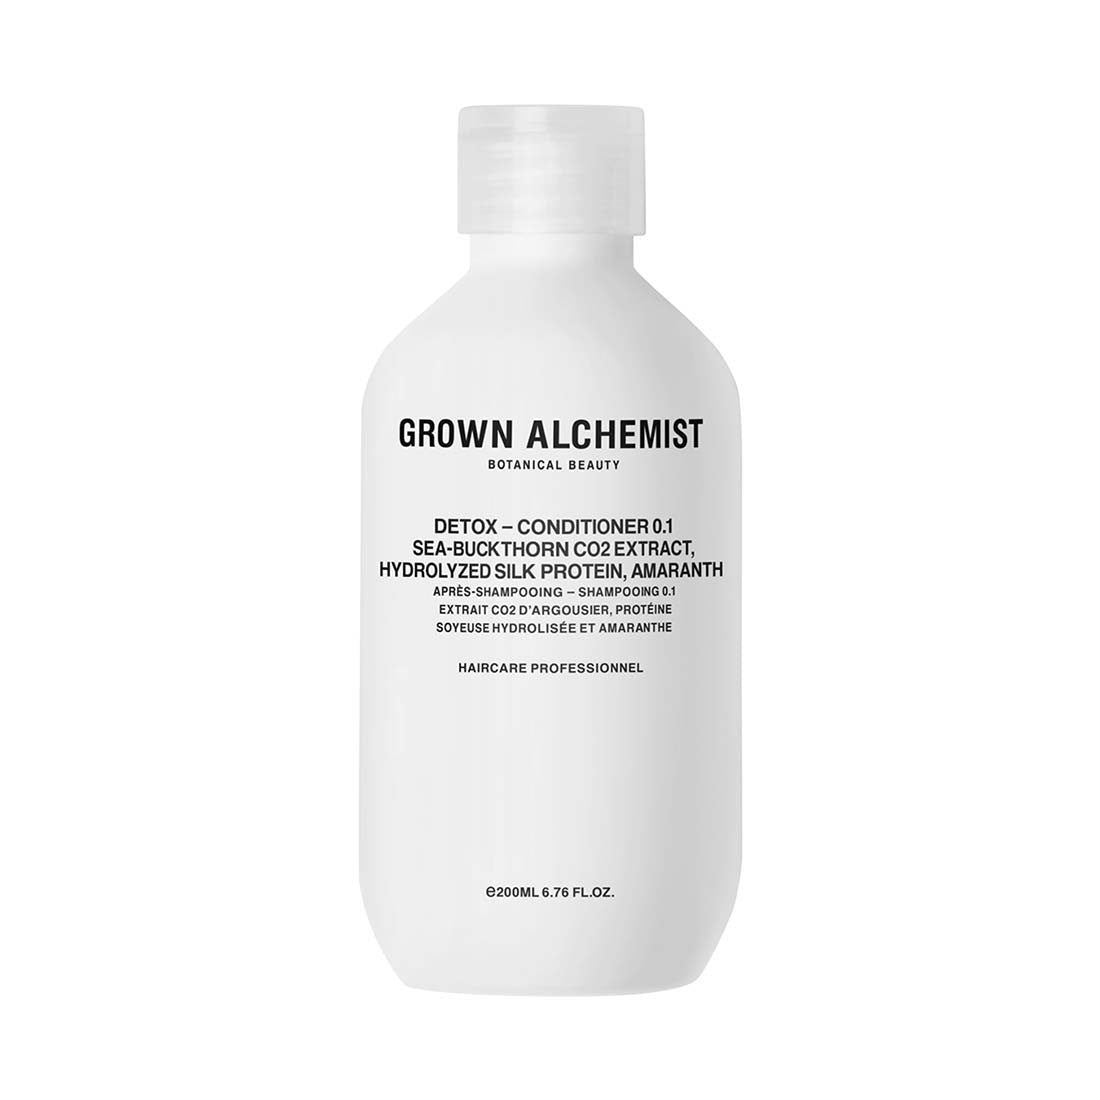 Grown Alchemist Detox Conditioner: Sea-Buckthorn CO2 Extract, Hydrolyzed Silk Protein, Amaranth